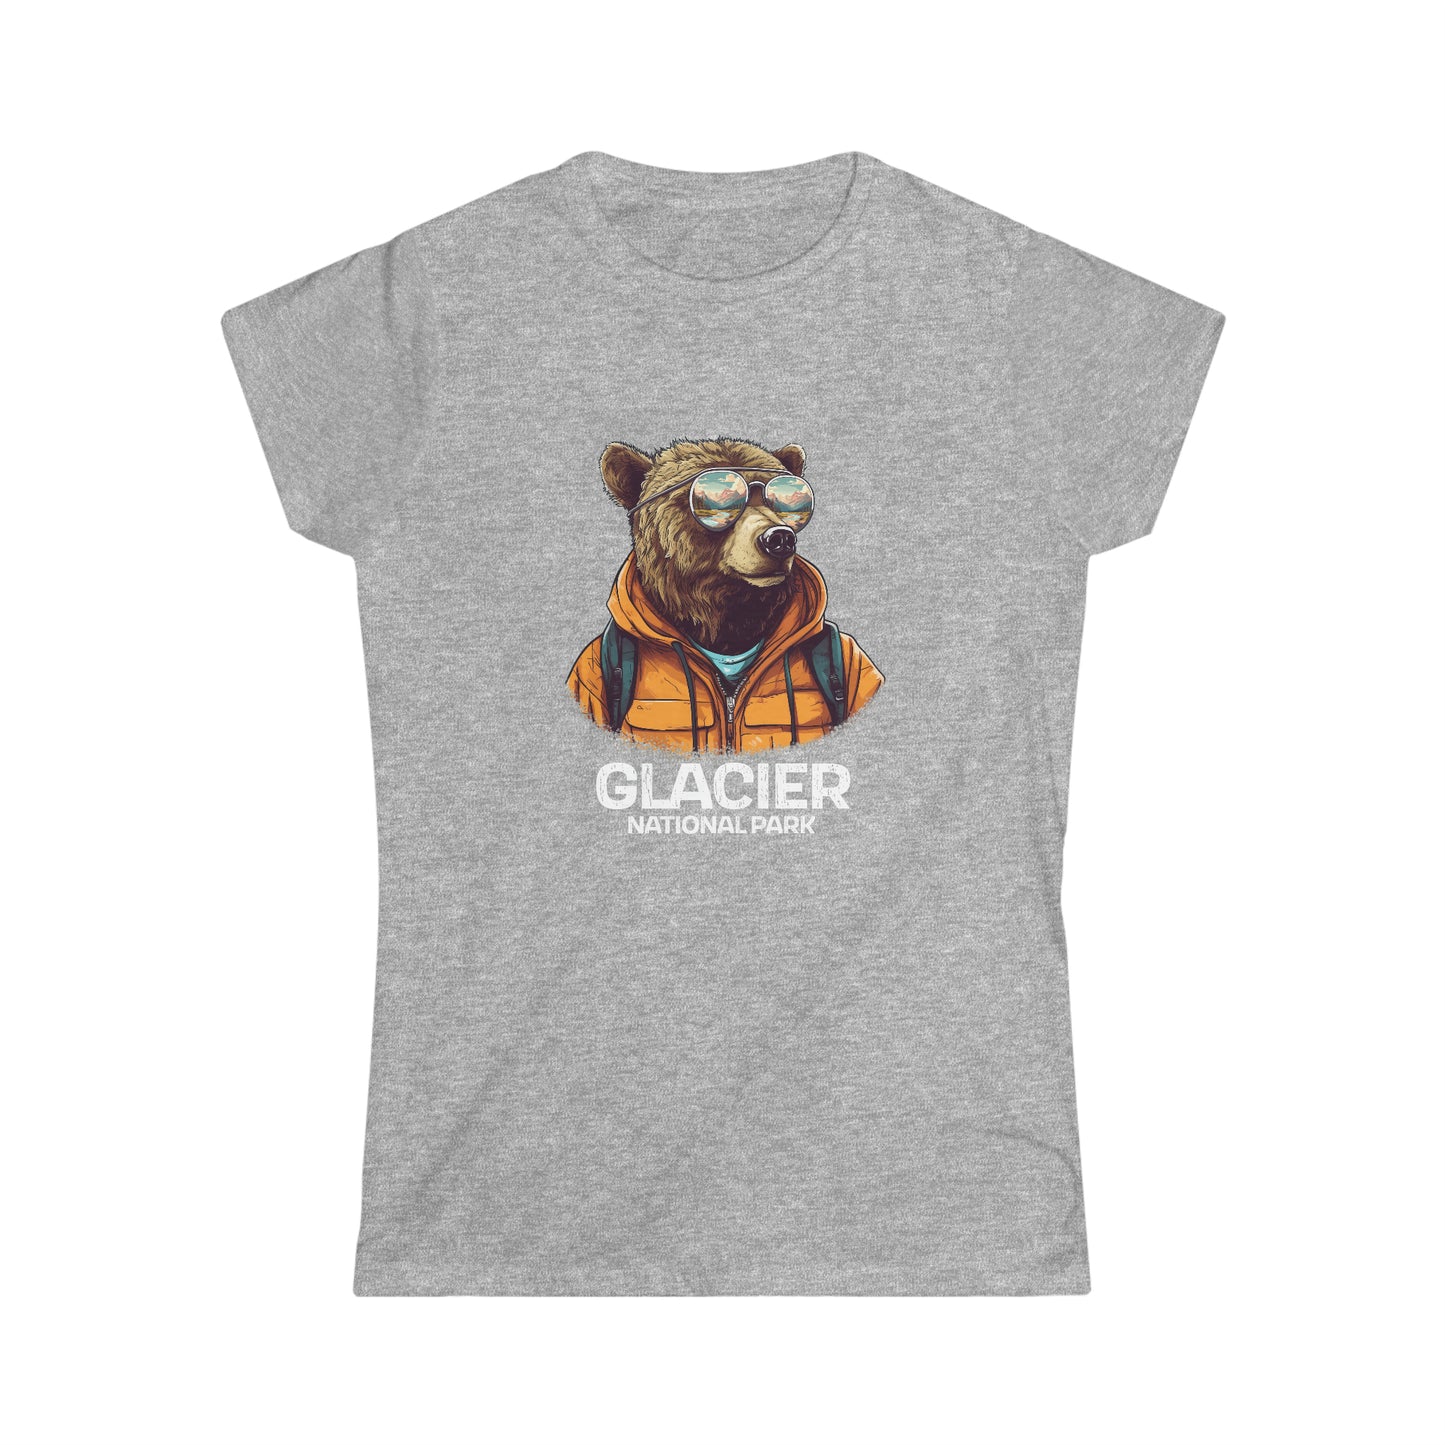 Glacier National Park Women's T-Shirt - Cool Grizzly Bear